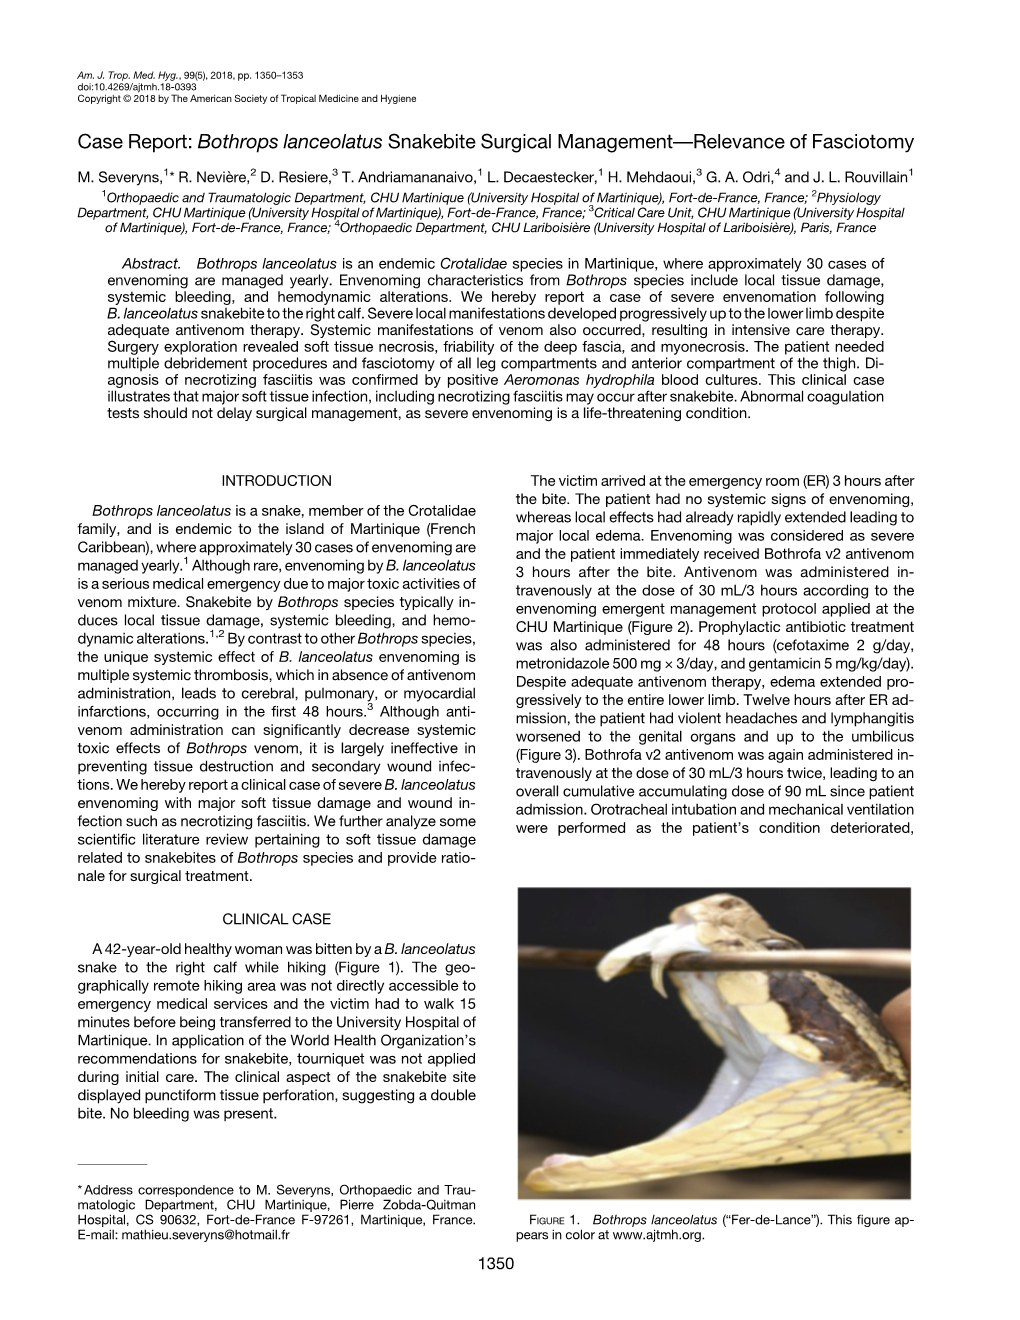 Bothrops Lanceolatus Snakebite Surgical Management—Relevance of Fasciotomy